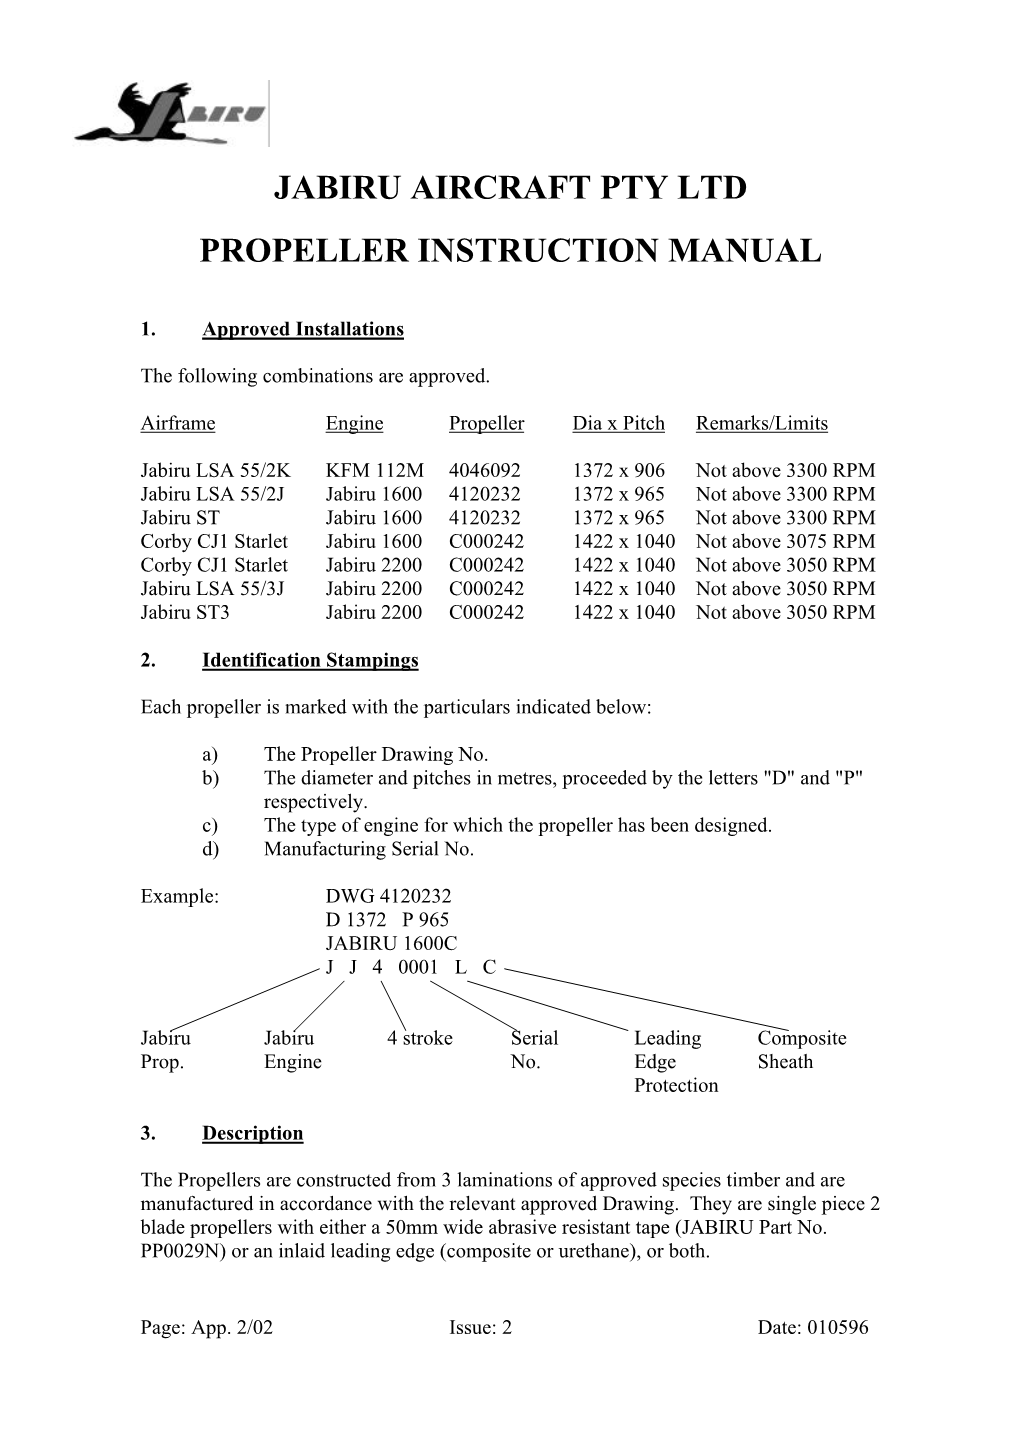 Prop Manual.PDF